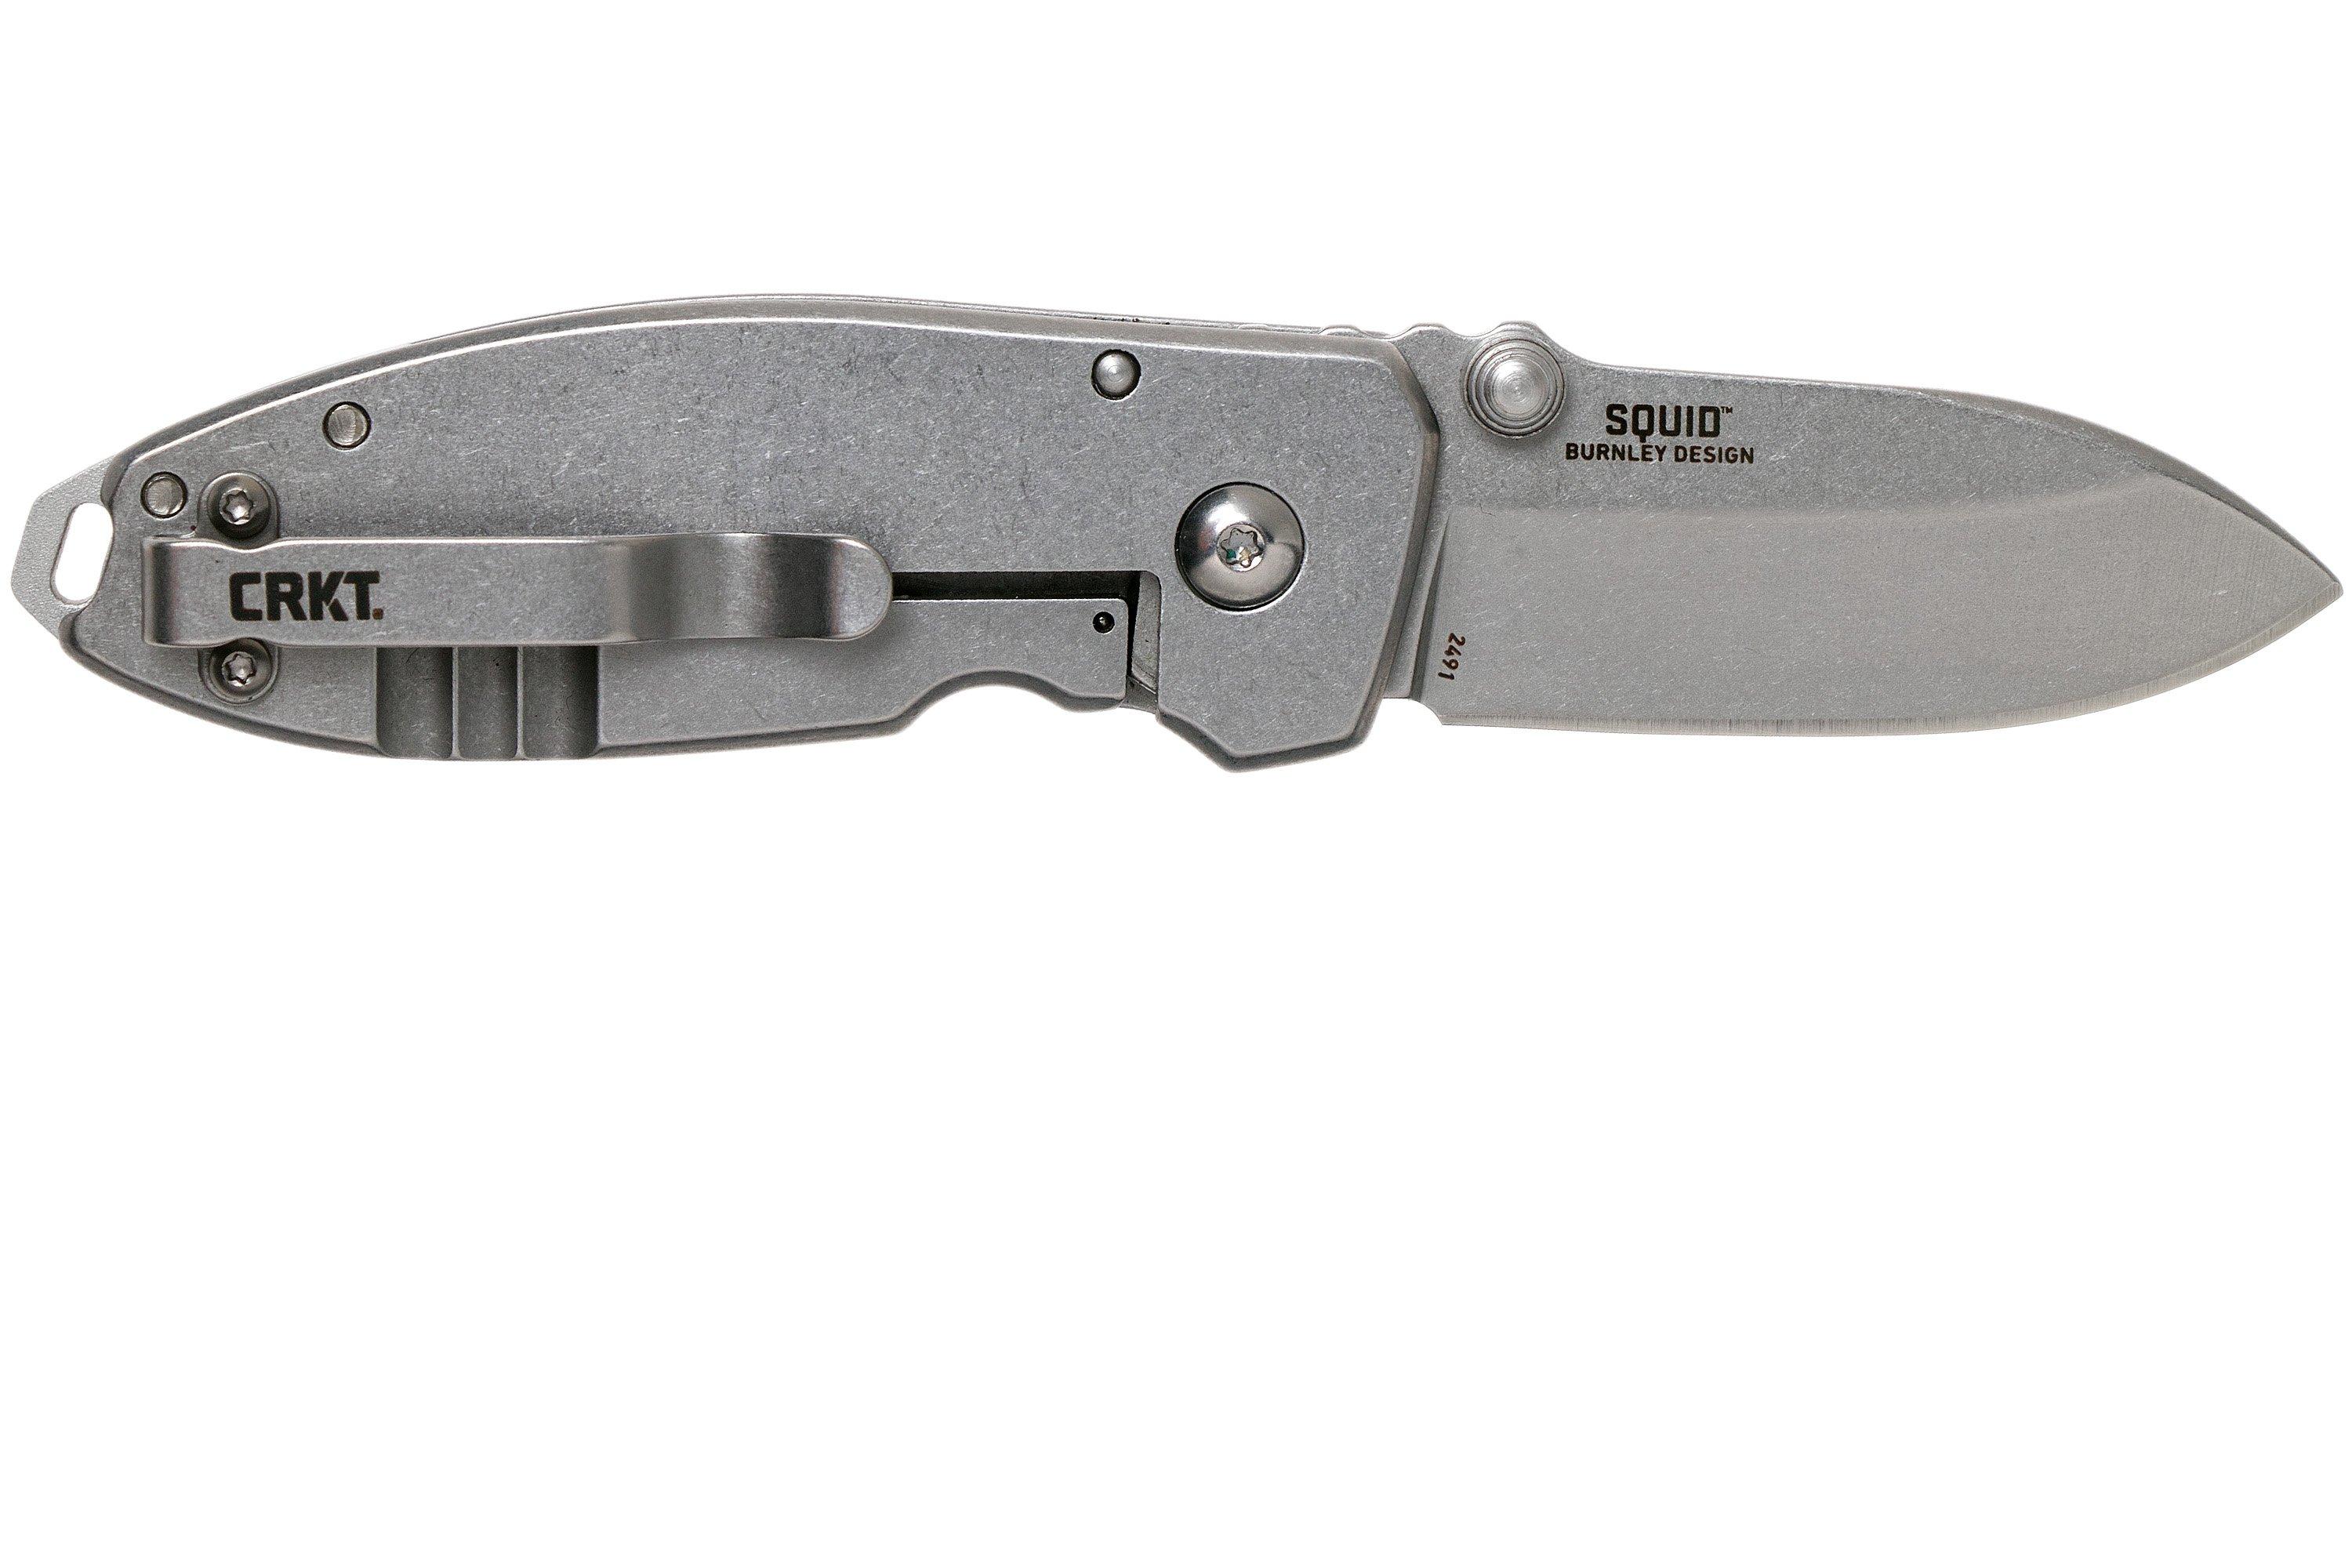 CRKT Squid 2491 Stonewash pocket knife, Lucas Burnley design 